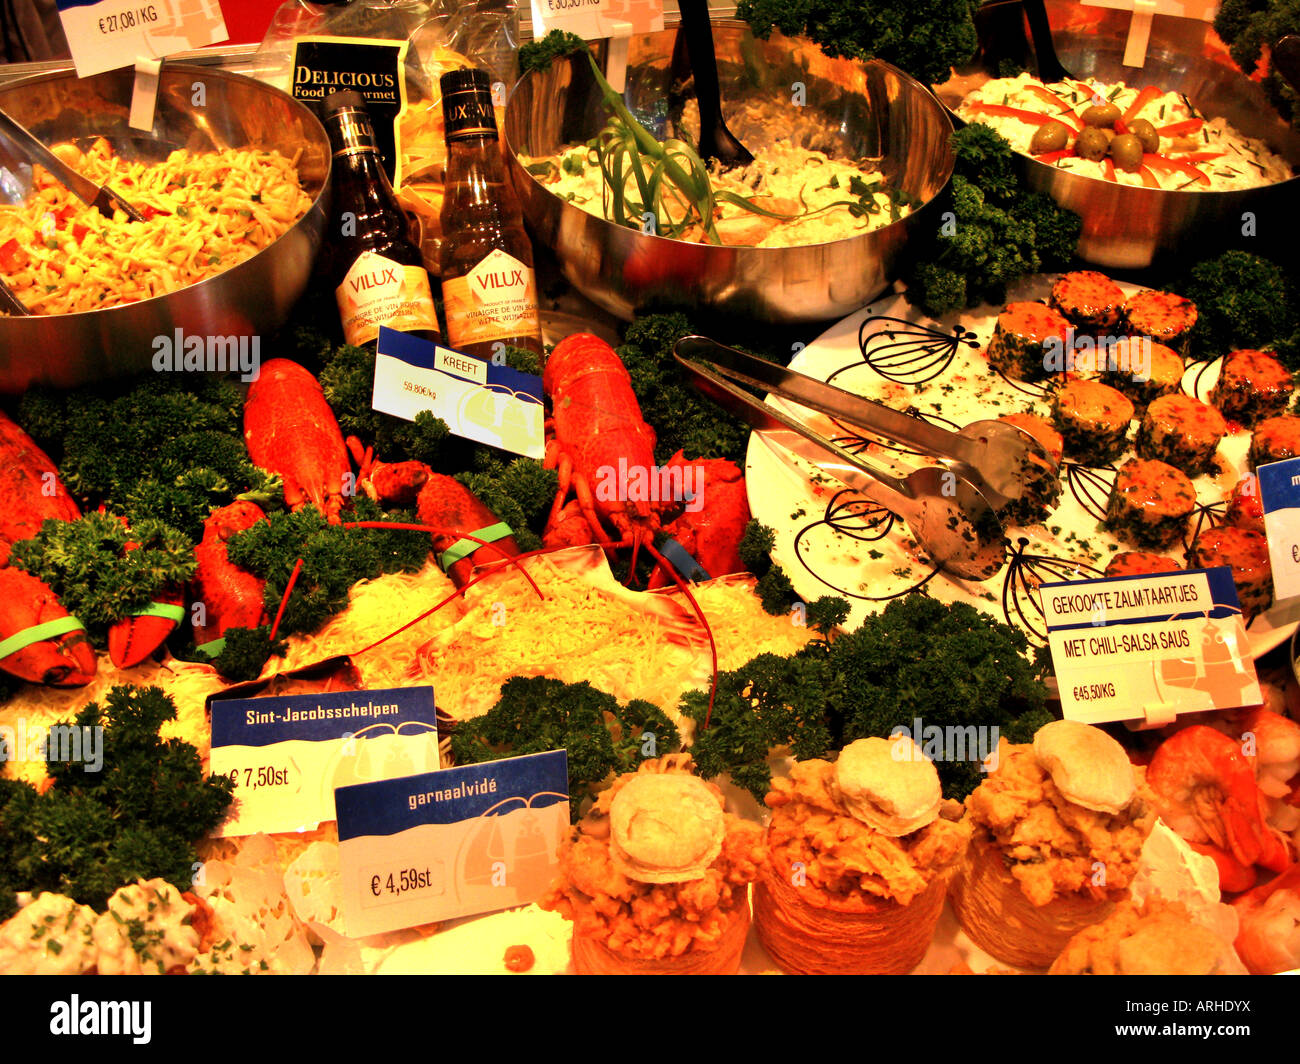 Anversa catering interno traiteur aragosta granchio Foto Stock